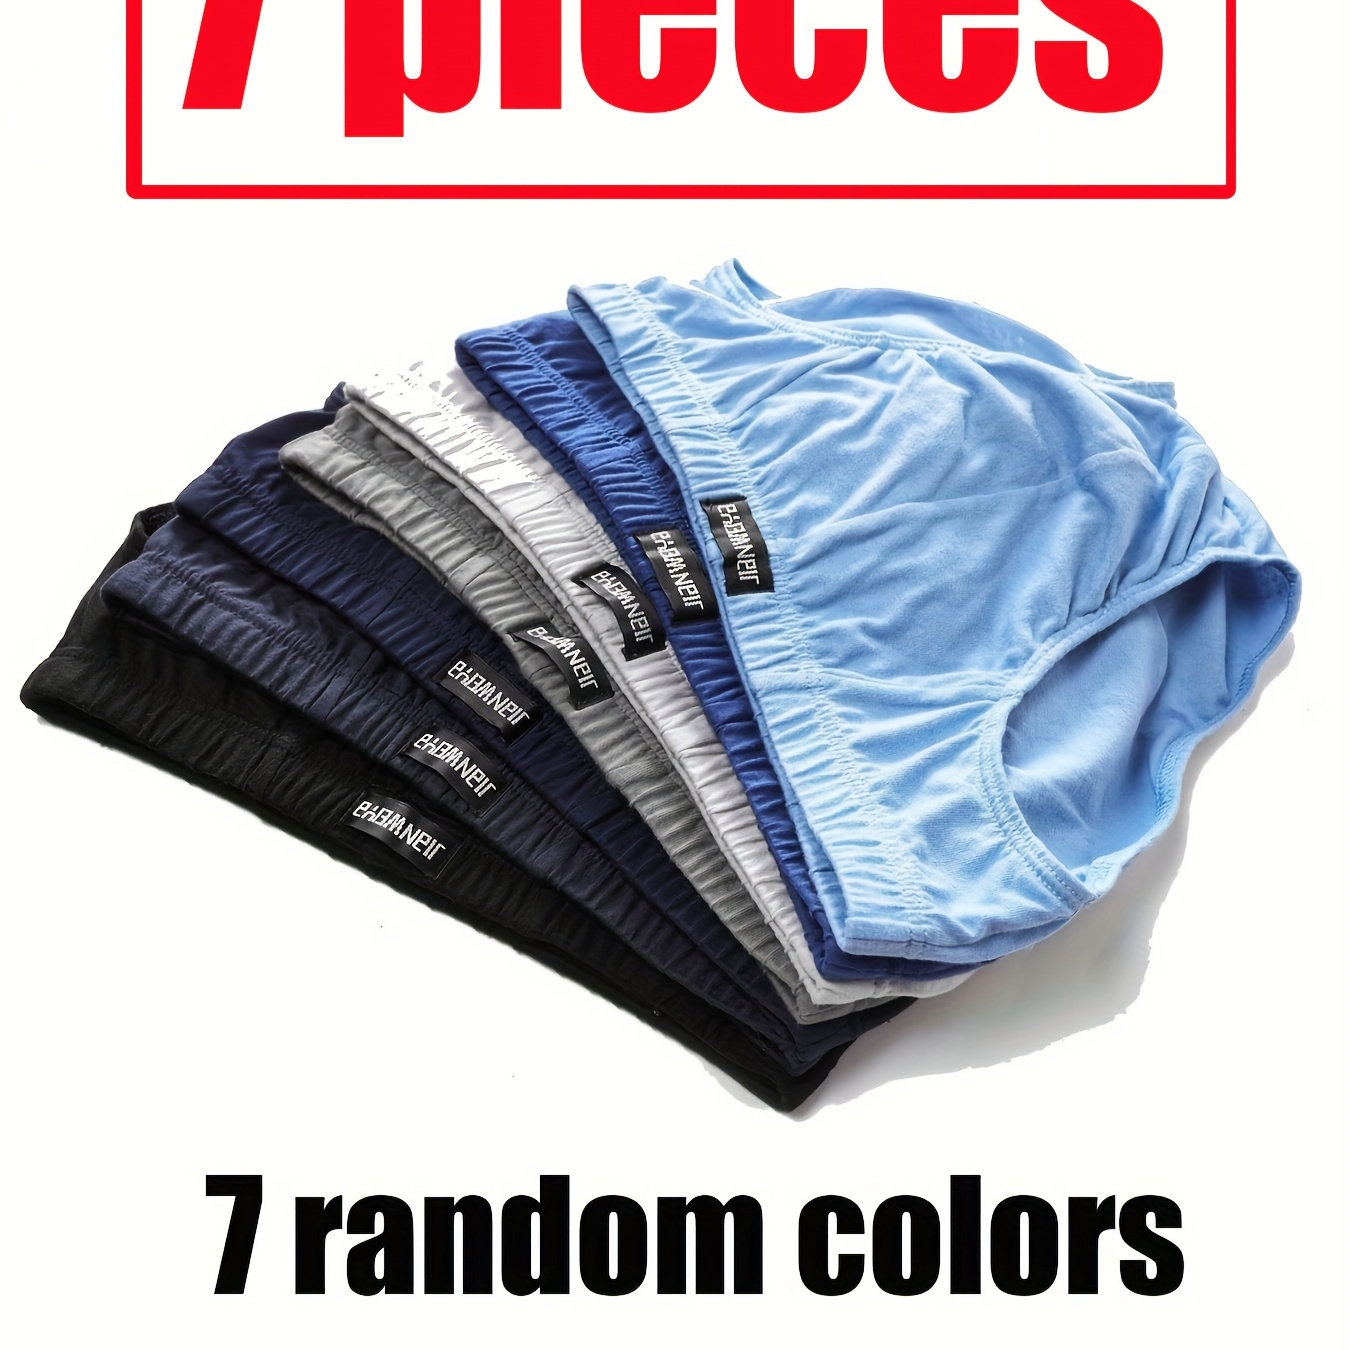 

Random Color Men's Cotton Breathable Underwear With A U-shaped Convex Pocket At The Waist Briefs